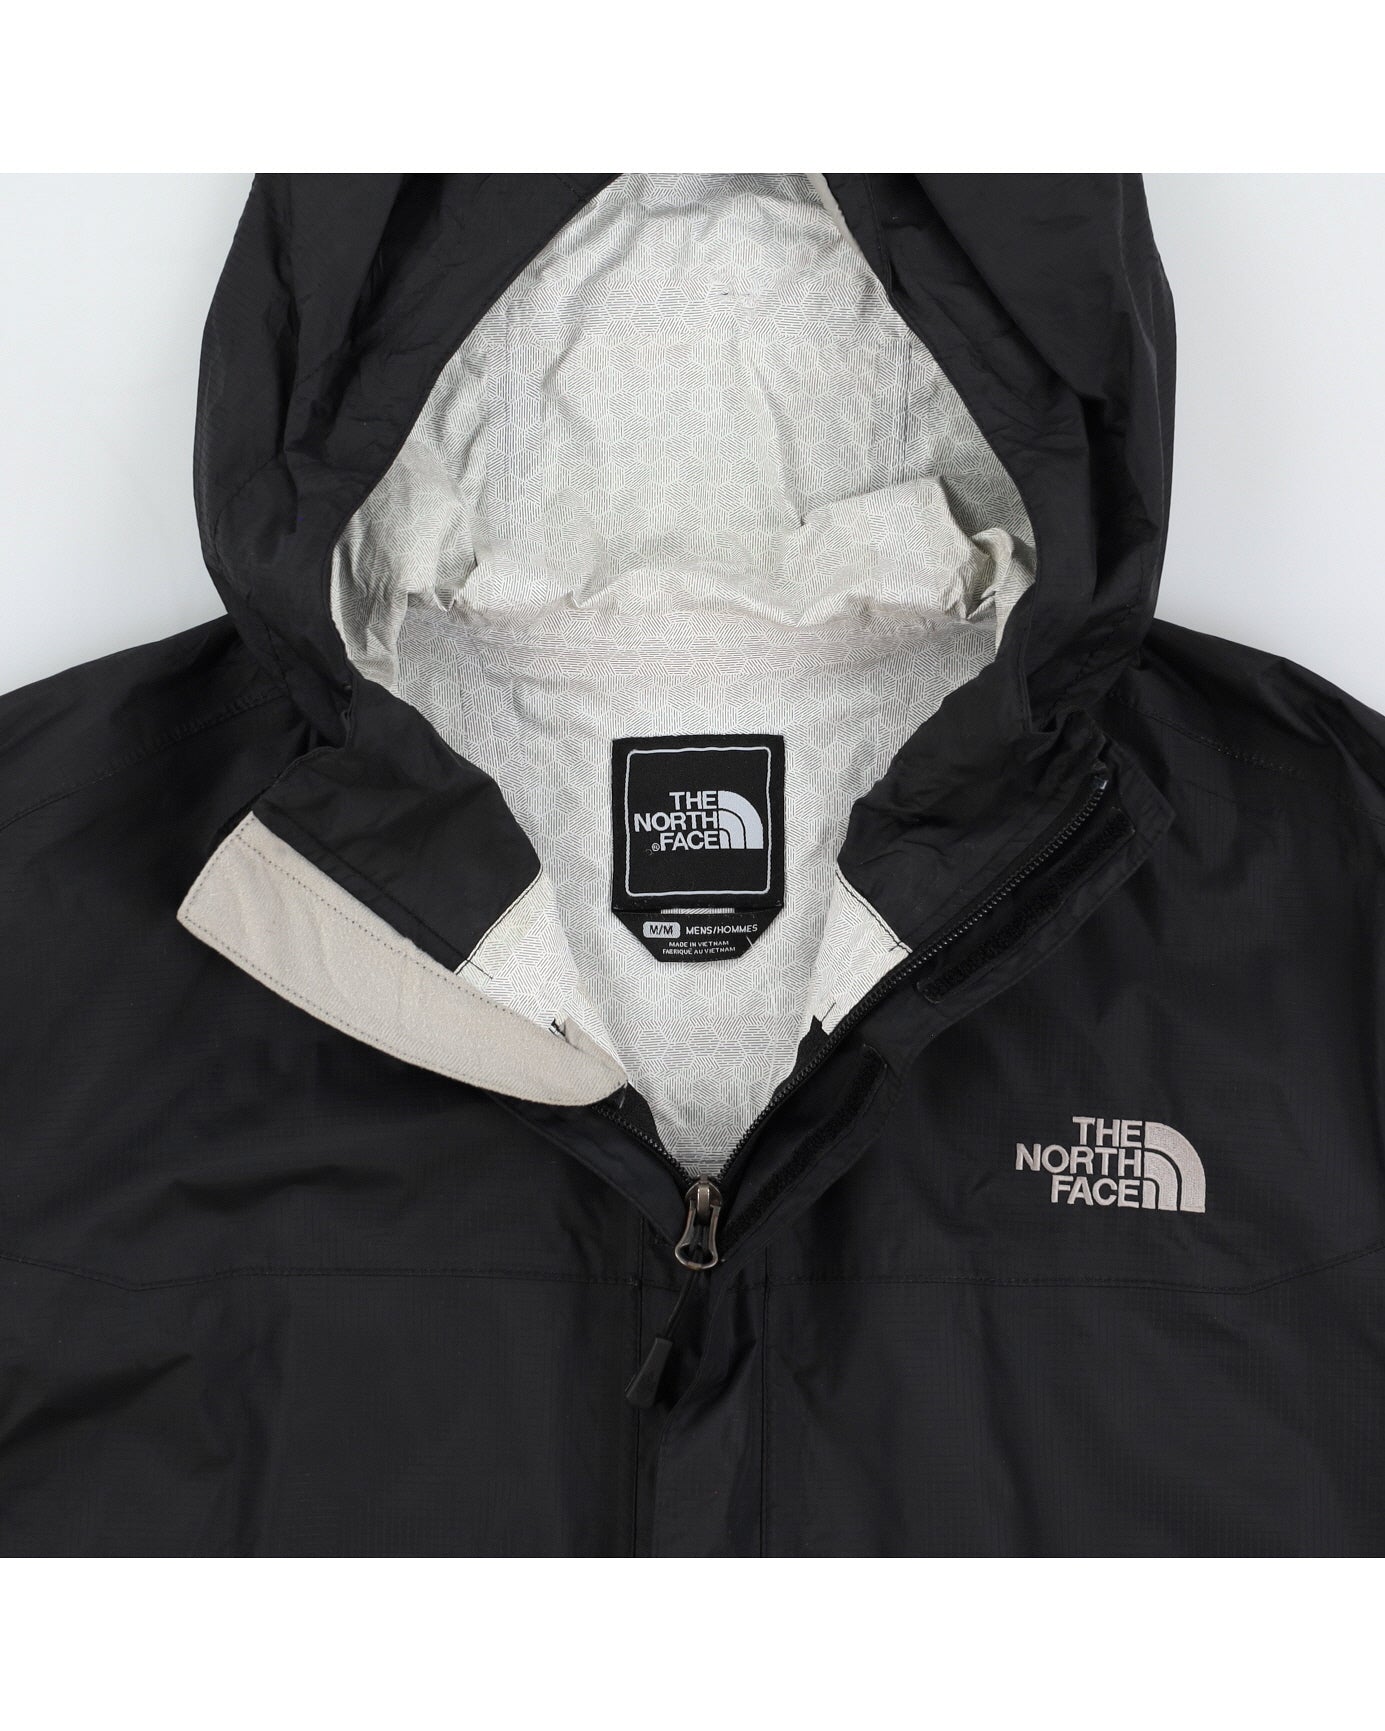 The North Face Men's Black Hooded Nylon Jacket - M